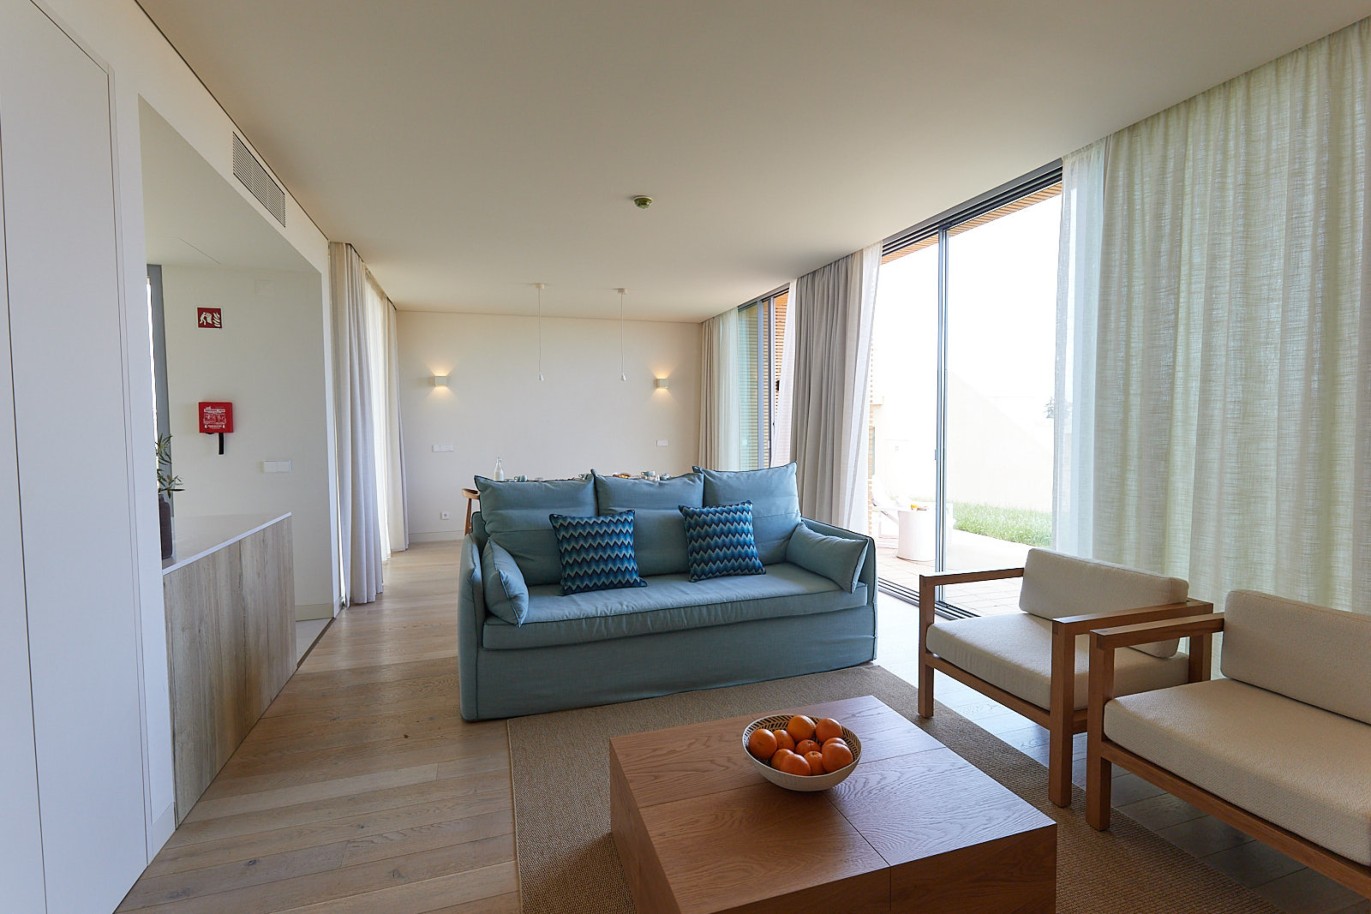 1 bedroom apartment in resort, for sale in Porches, Algarve_228994